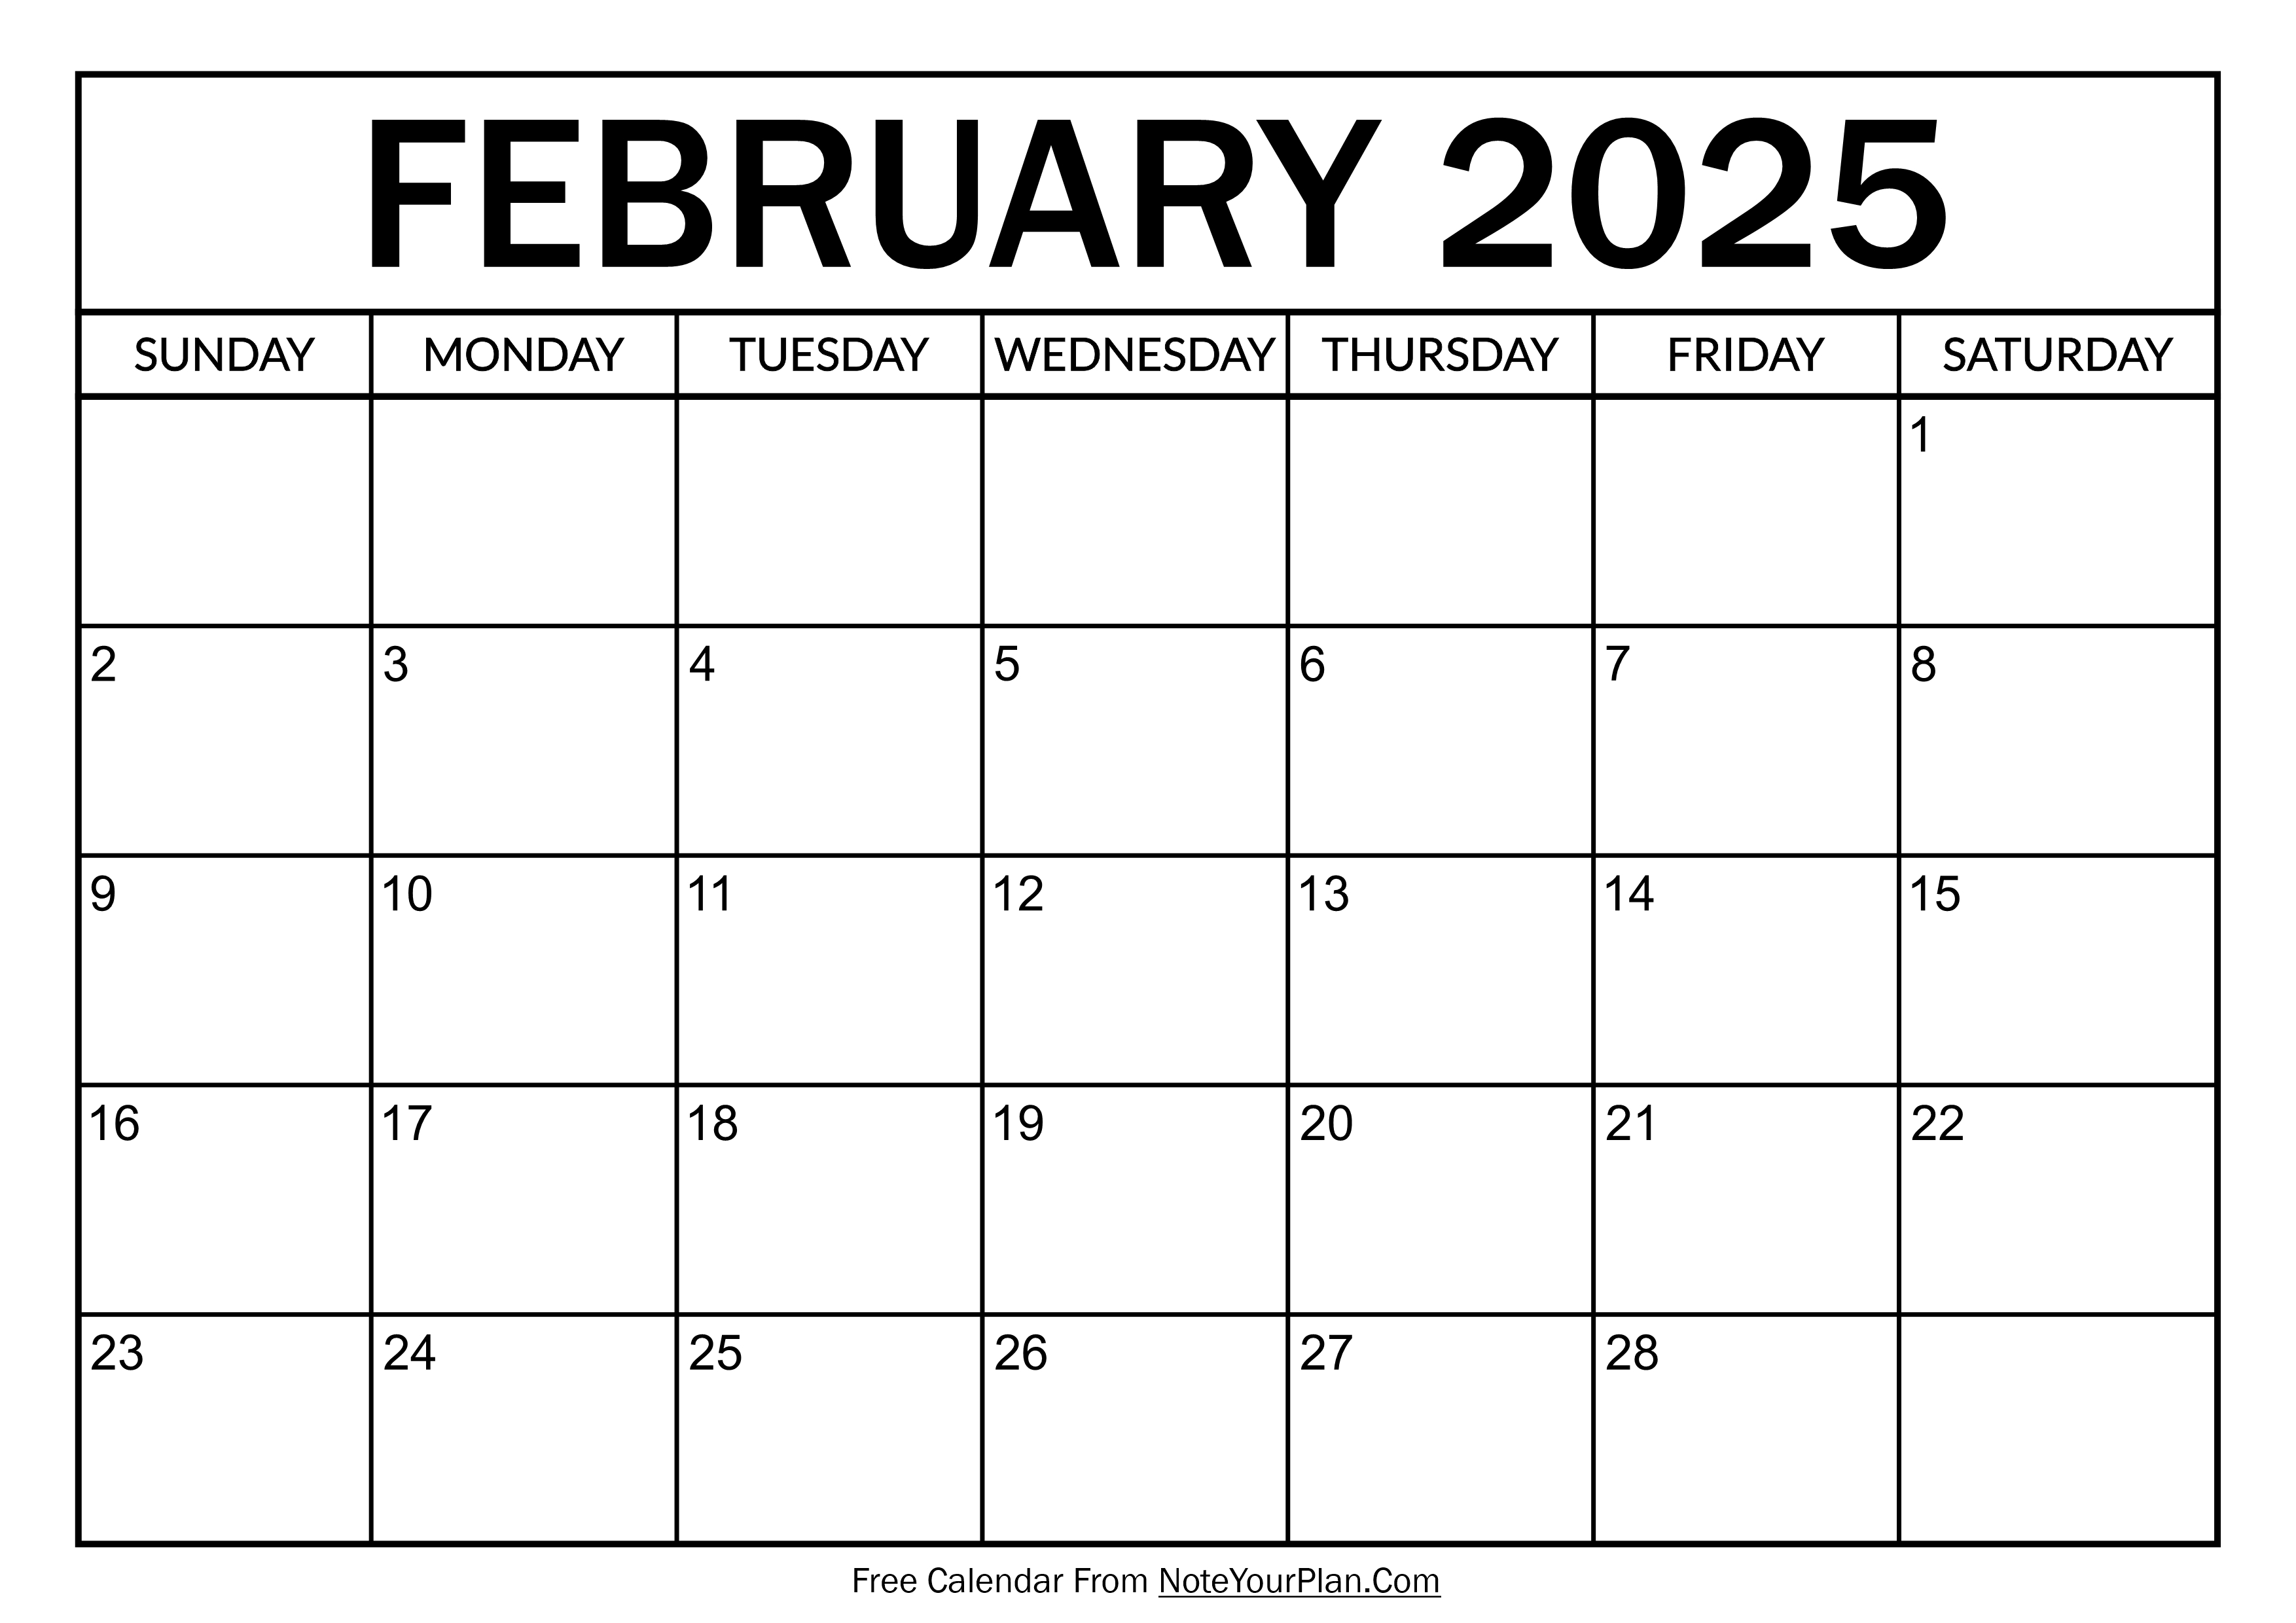 Free Februay Calendar 2025